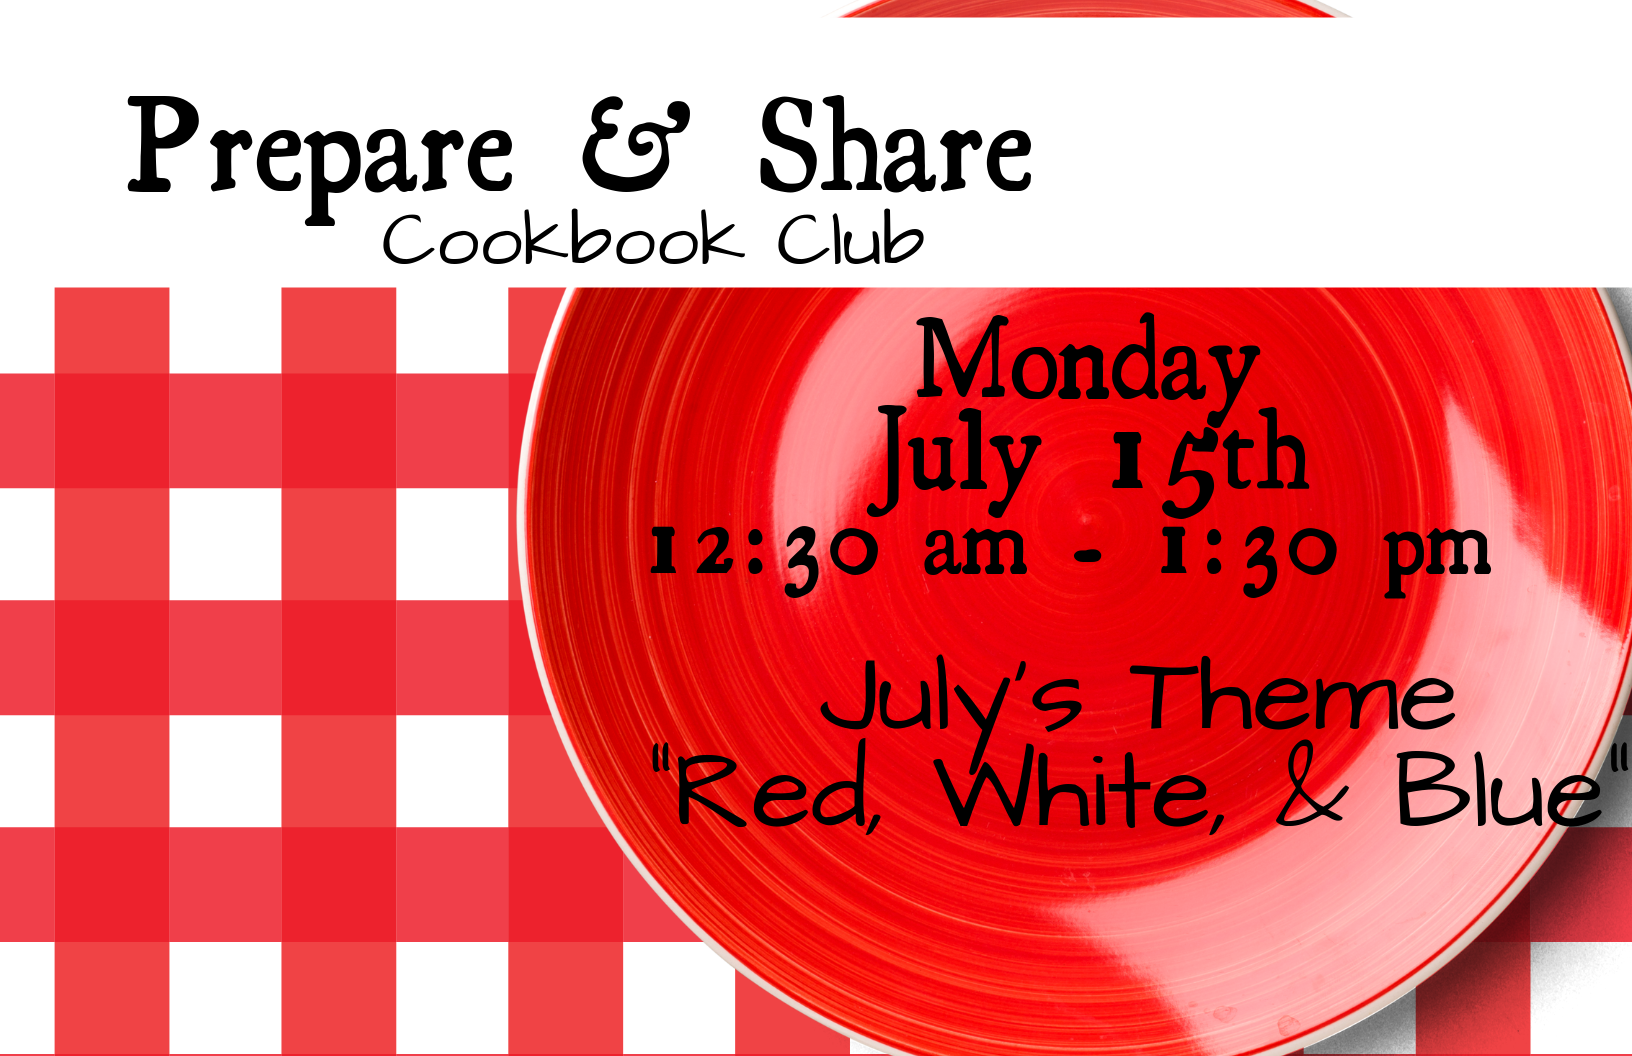 Prepare & Share Cookbook Club - August "Pasta"